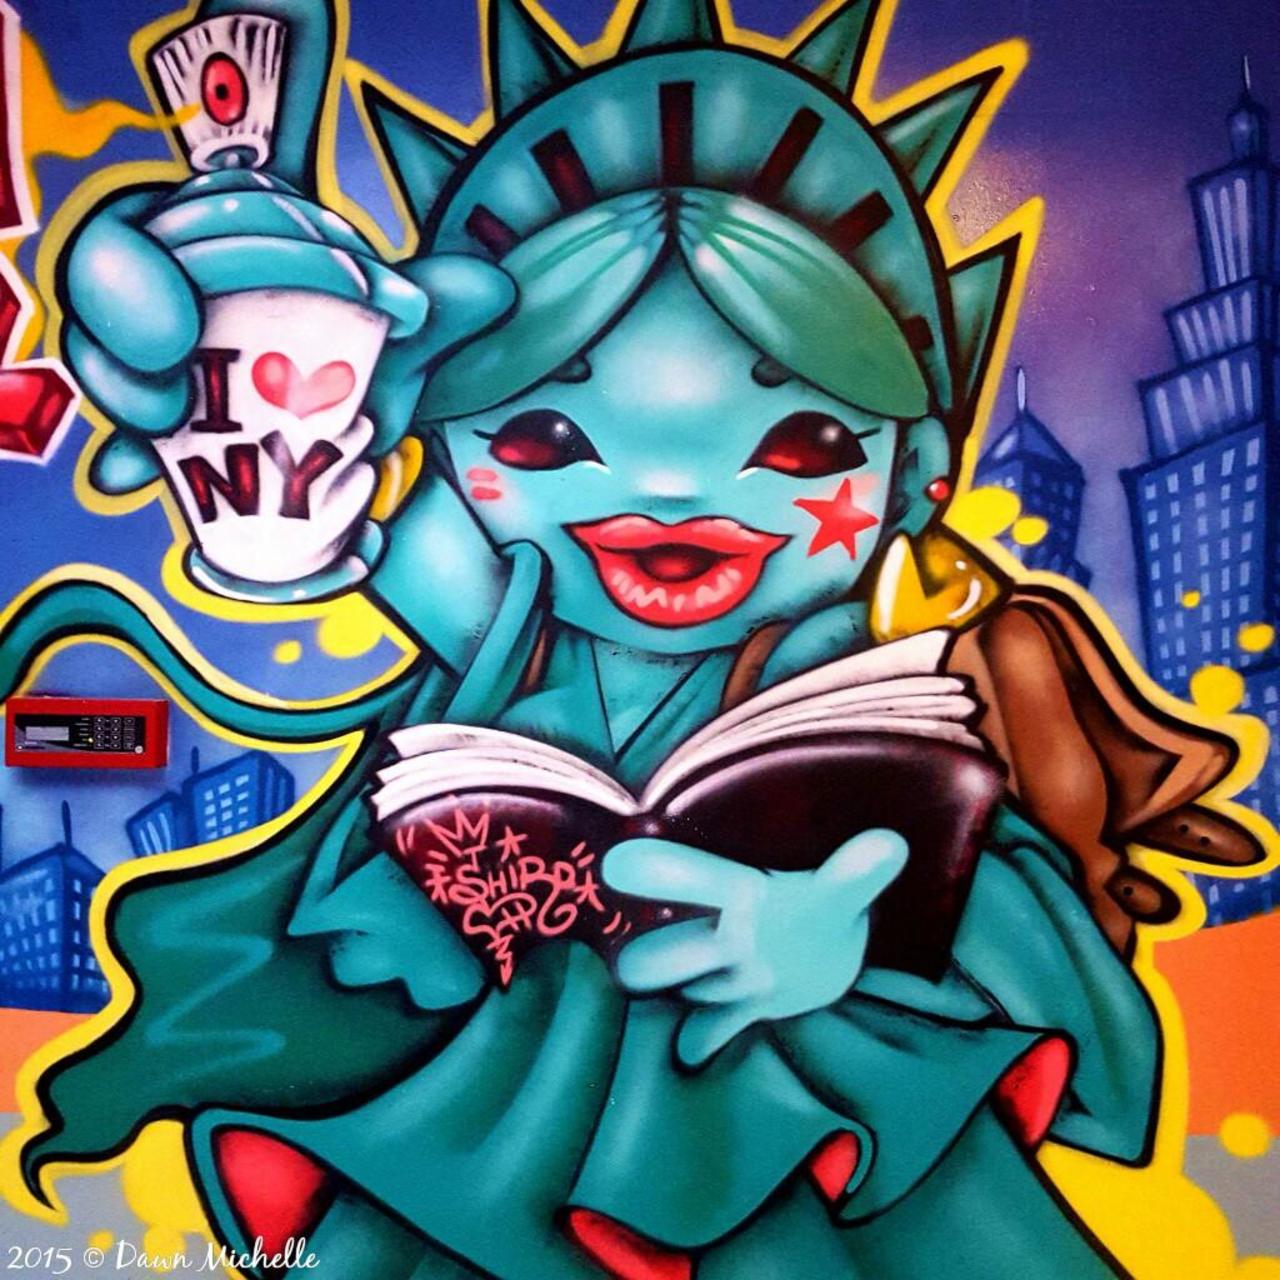 Dope @shiro_one in #brooklyn #graffiti #graff #streetart @circumjacent @globalgraff @MadeInManchestr @GraffitiFeed https://t.co/gRKlXprxdg